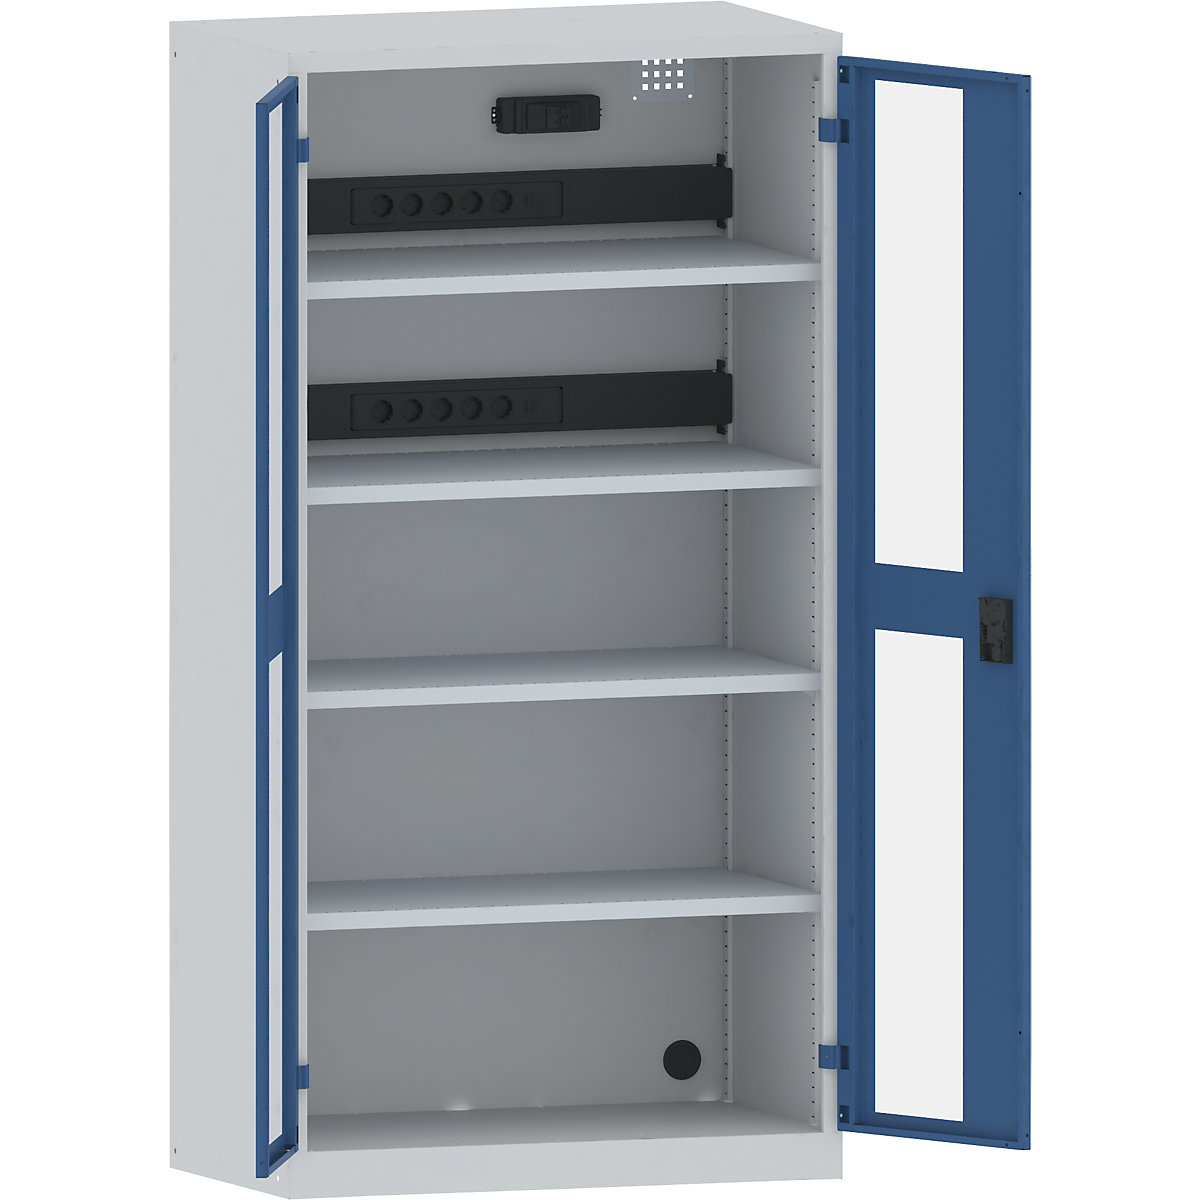 LISTA – Armario cargador de baterías, 4 baldas, puertas con ventanilla, 2 regletas de enchufes detrás con interruptor FI/LS, gris / azul